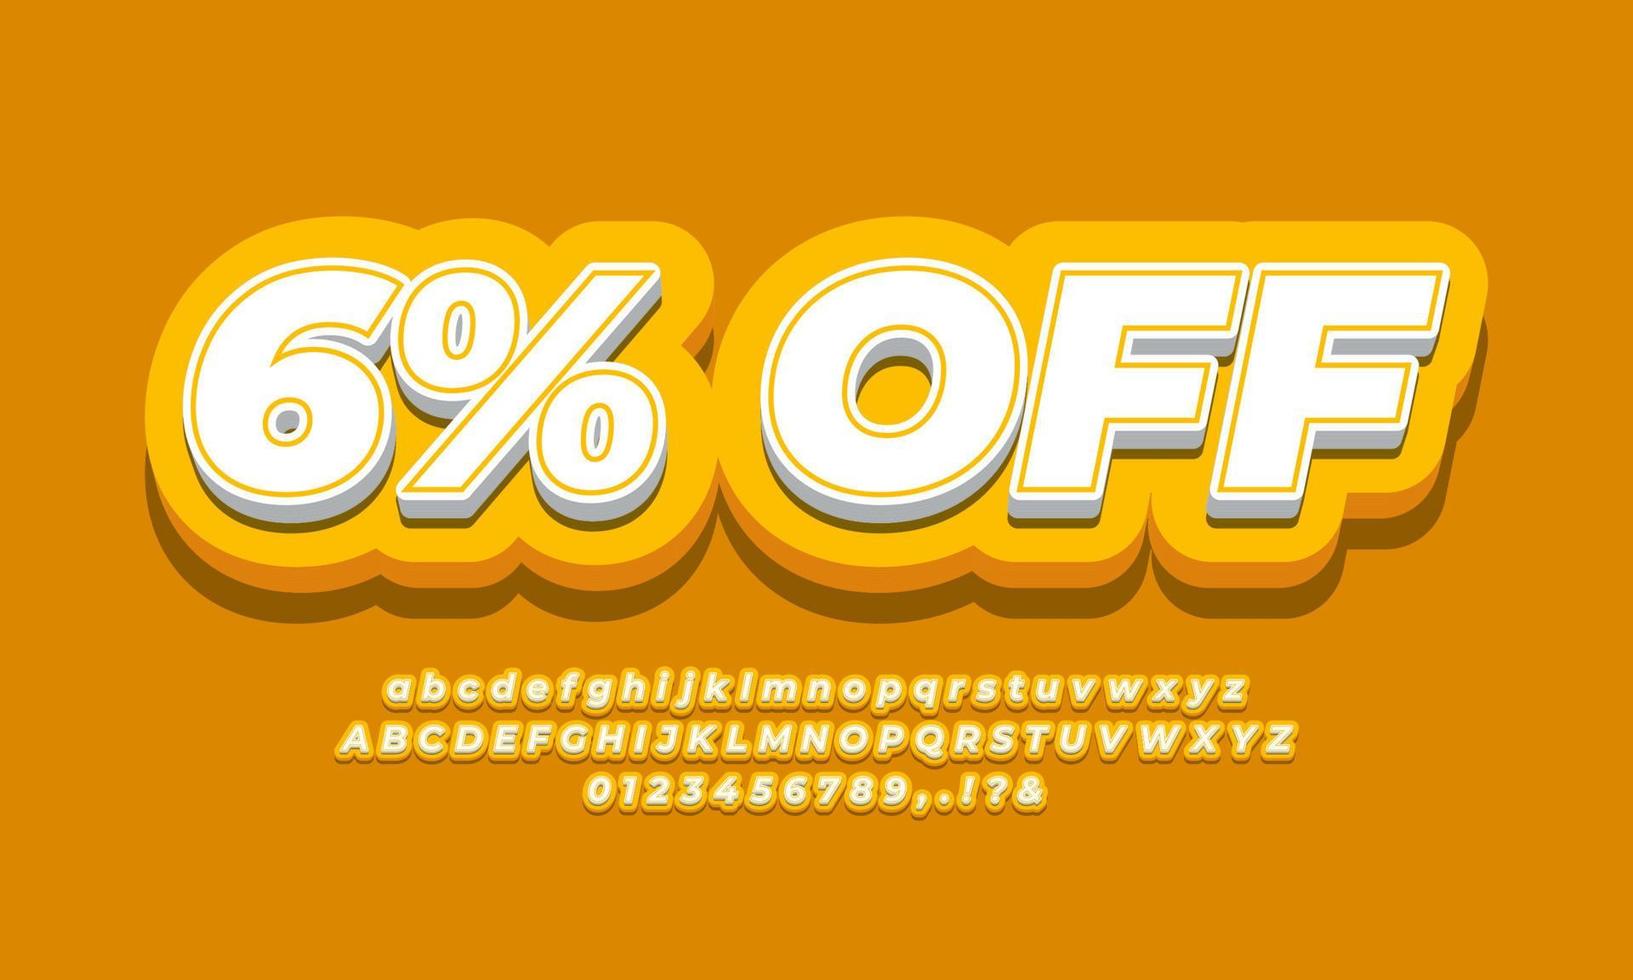 6 percent off sale discount promotion text 3d yellow orange vector